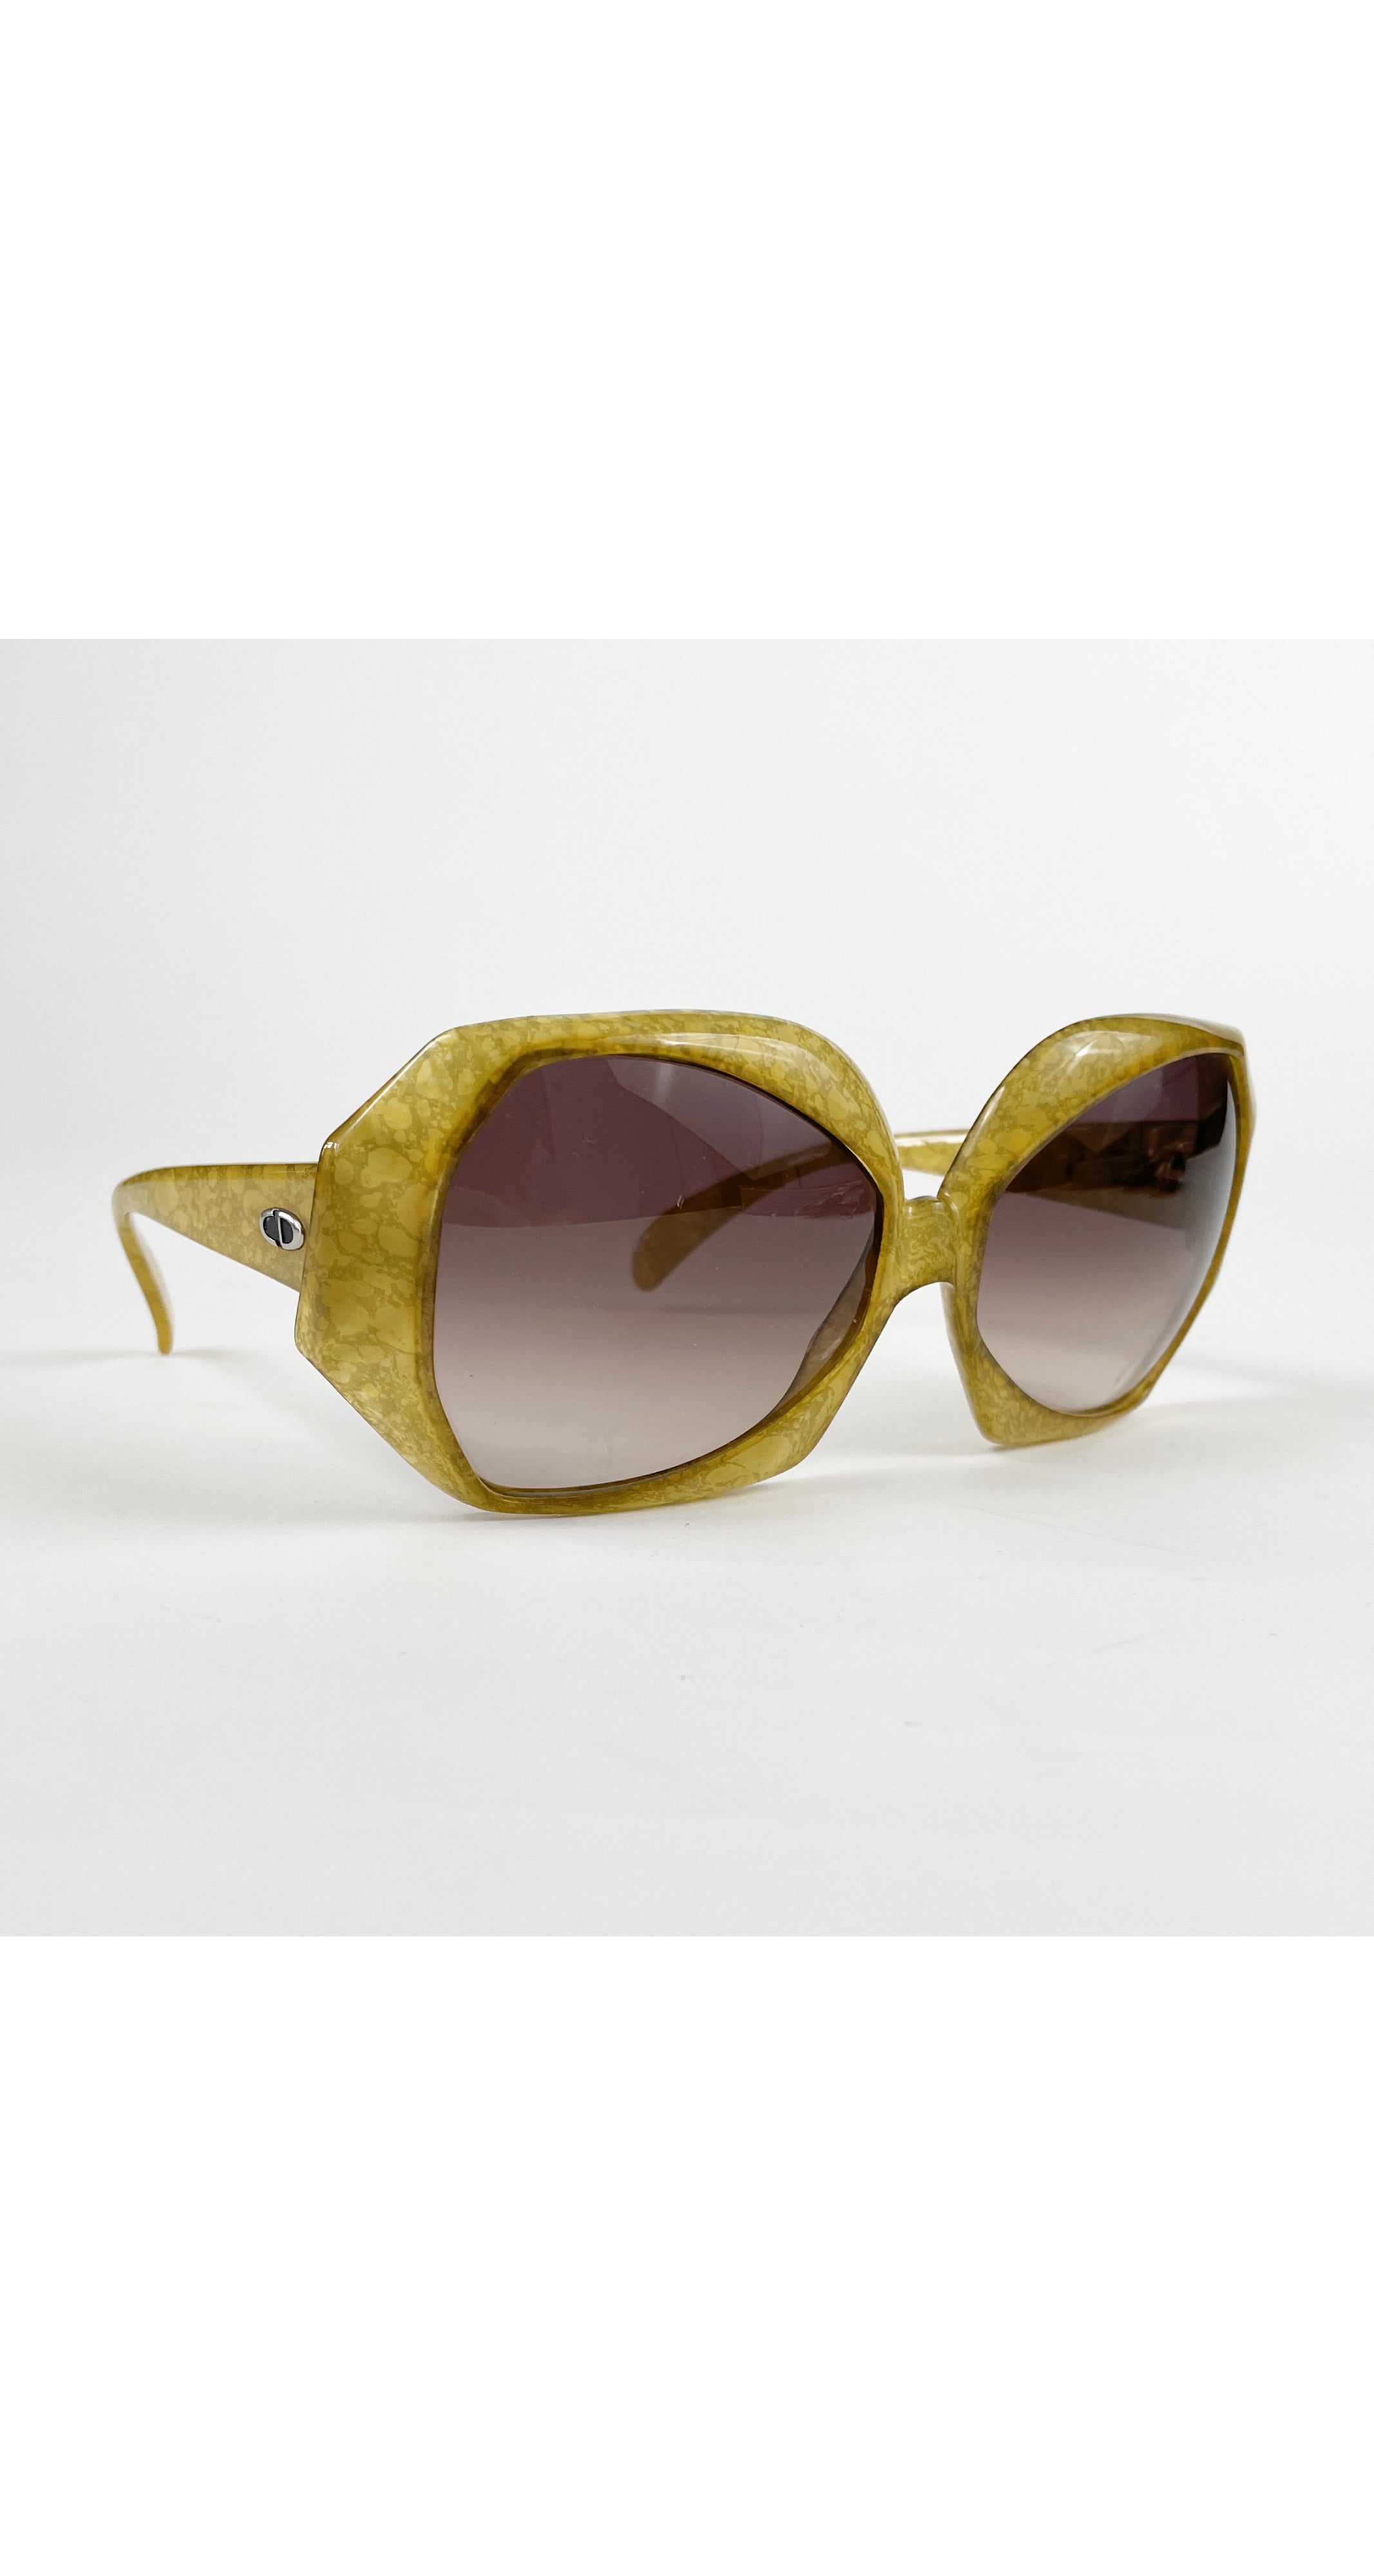 1976 Ad Campaign "2025-20" Optyl Dijon Sunglasses